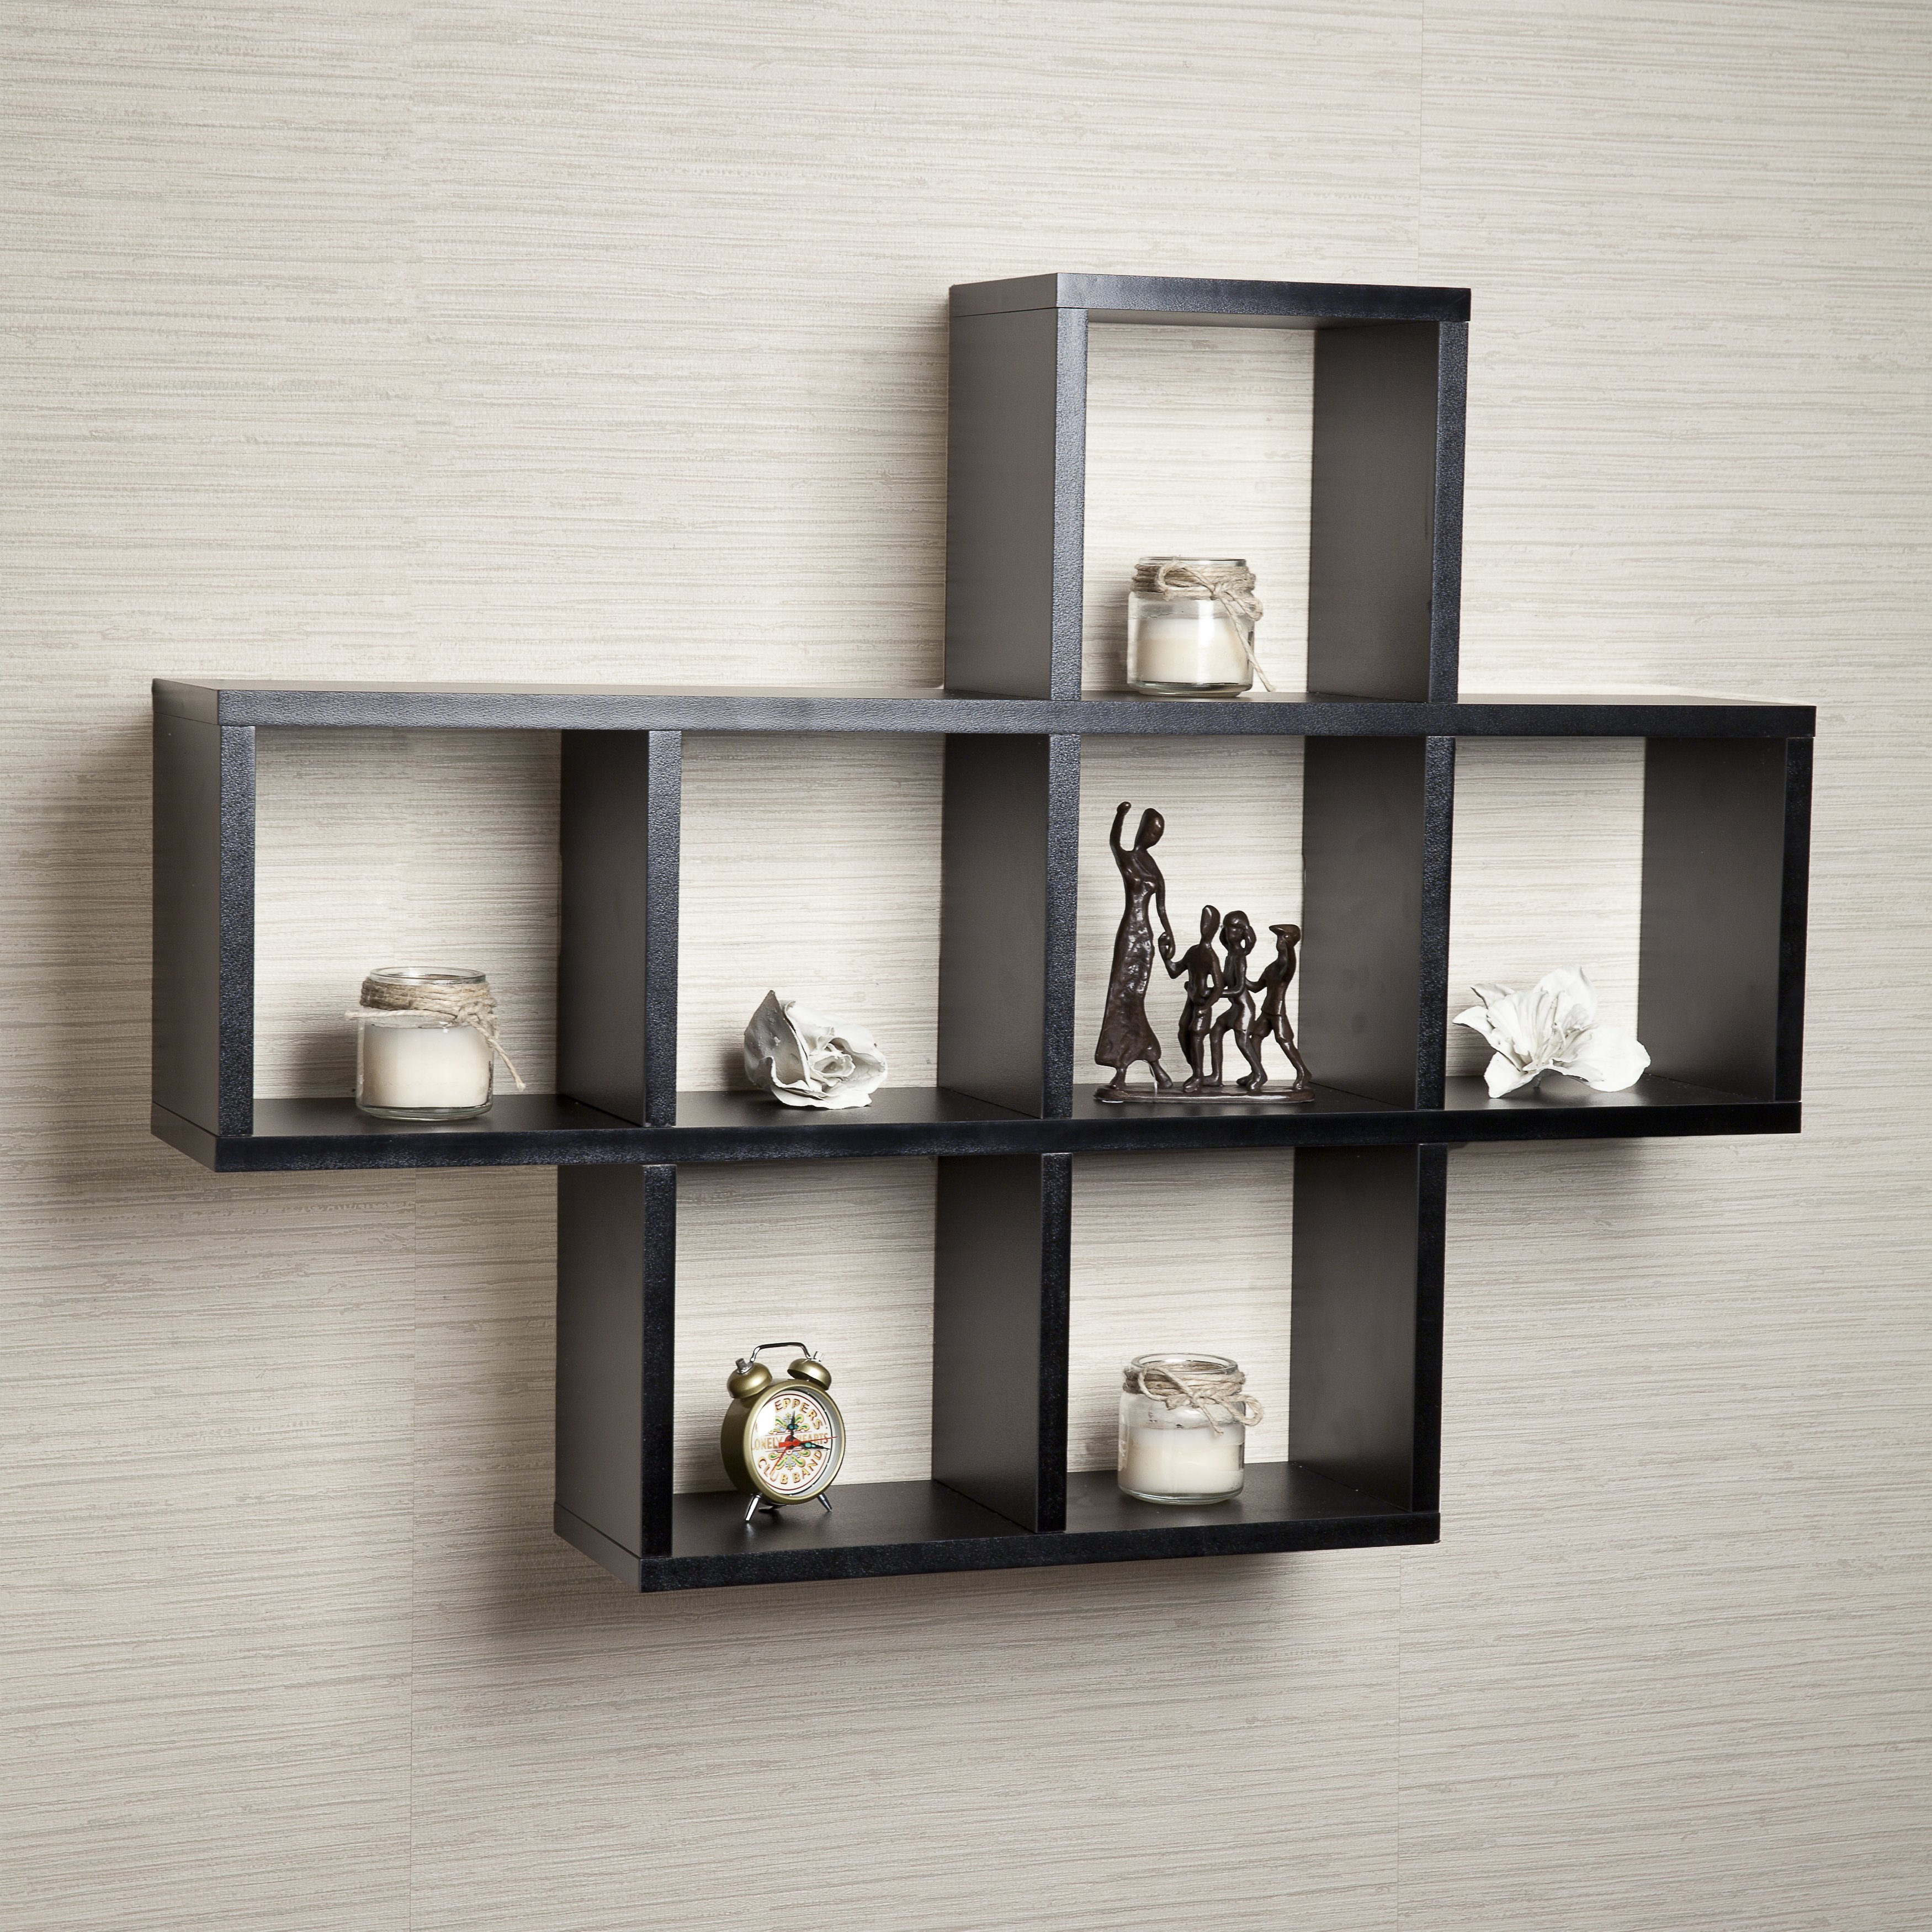 Stunning Wall u0026 Display Shelves Youu0027ll Love | Wayfair wall shelving units